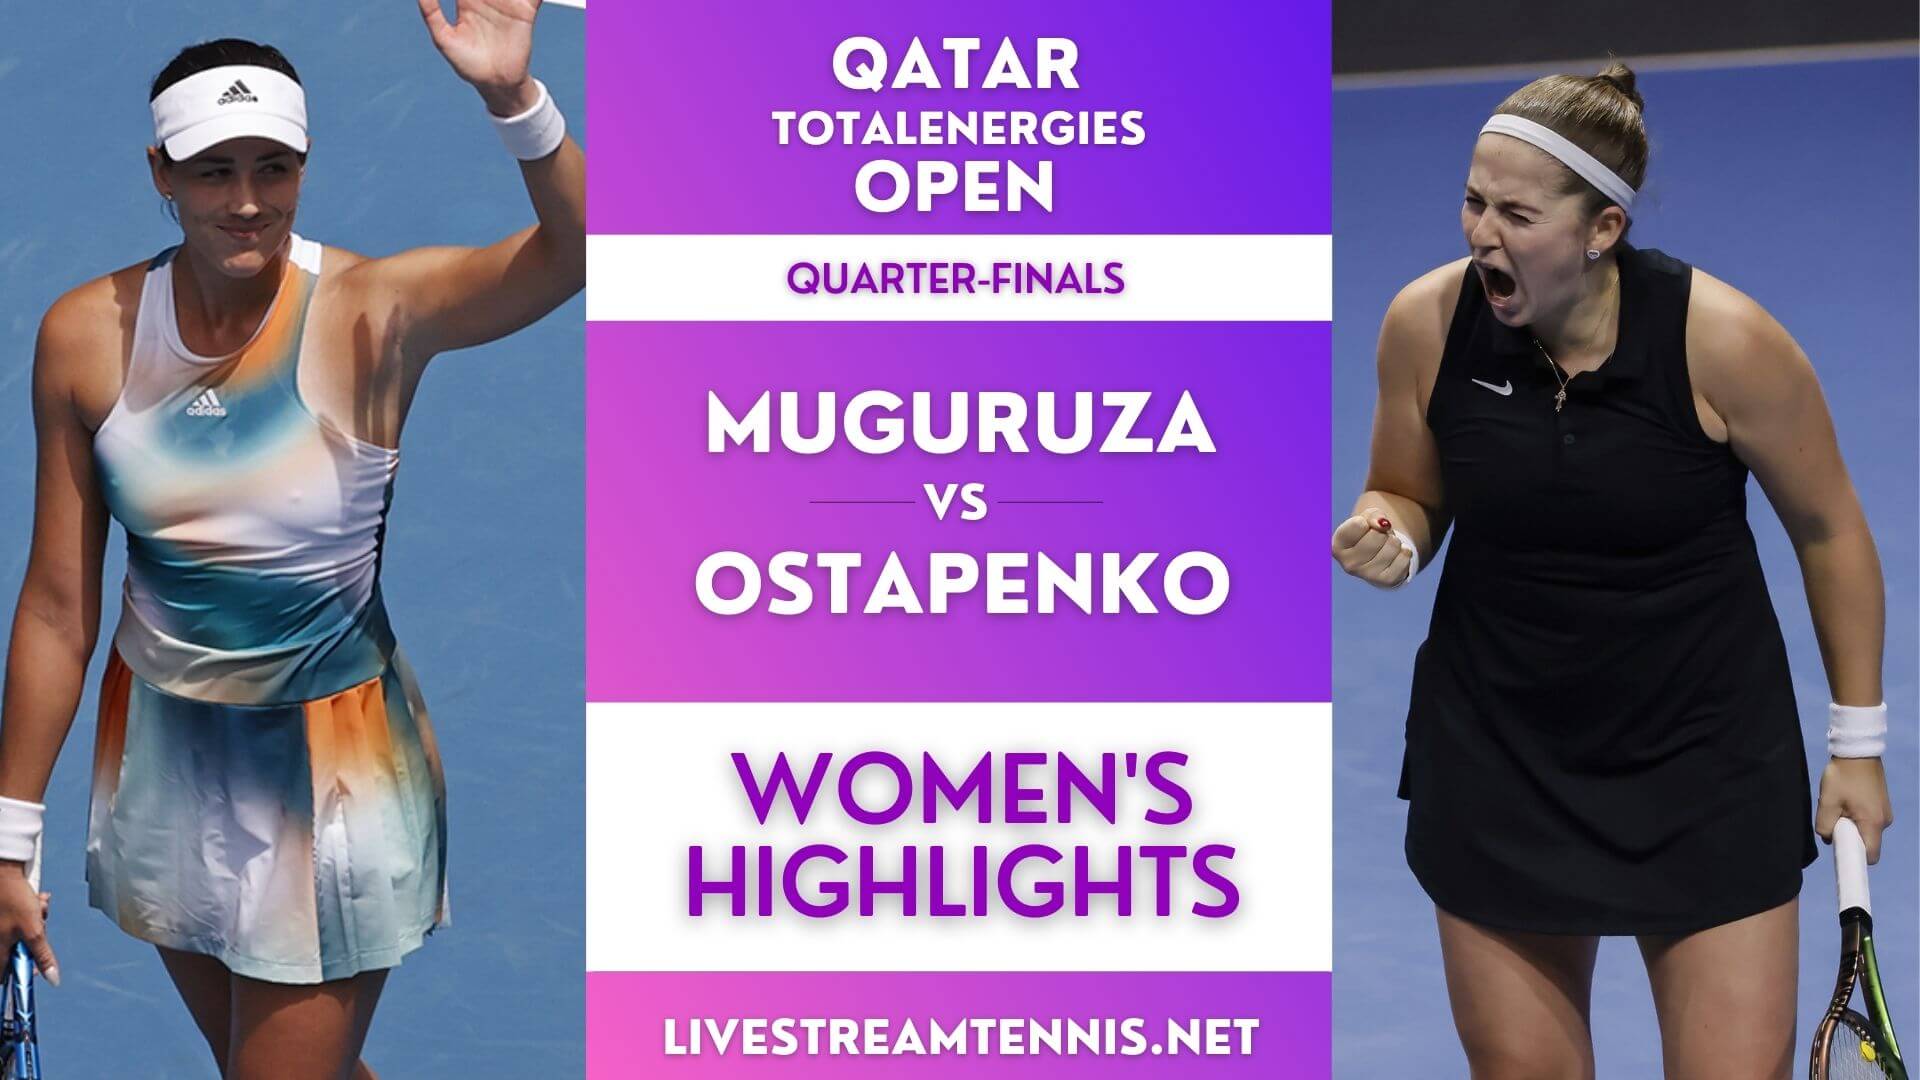 Qatar Open Ladies Quarter Final 2 Highlights 2022